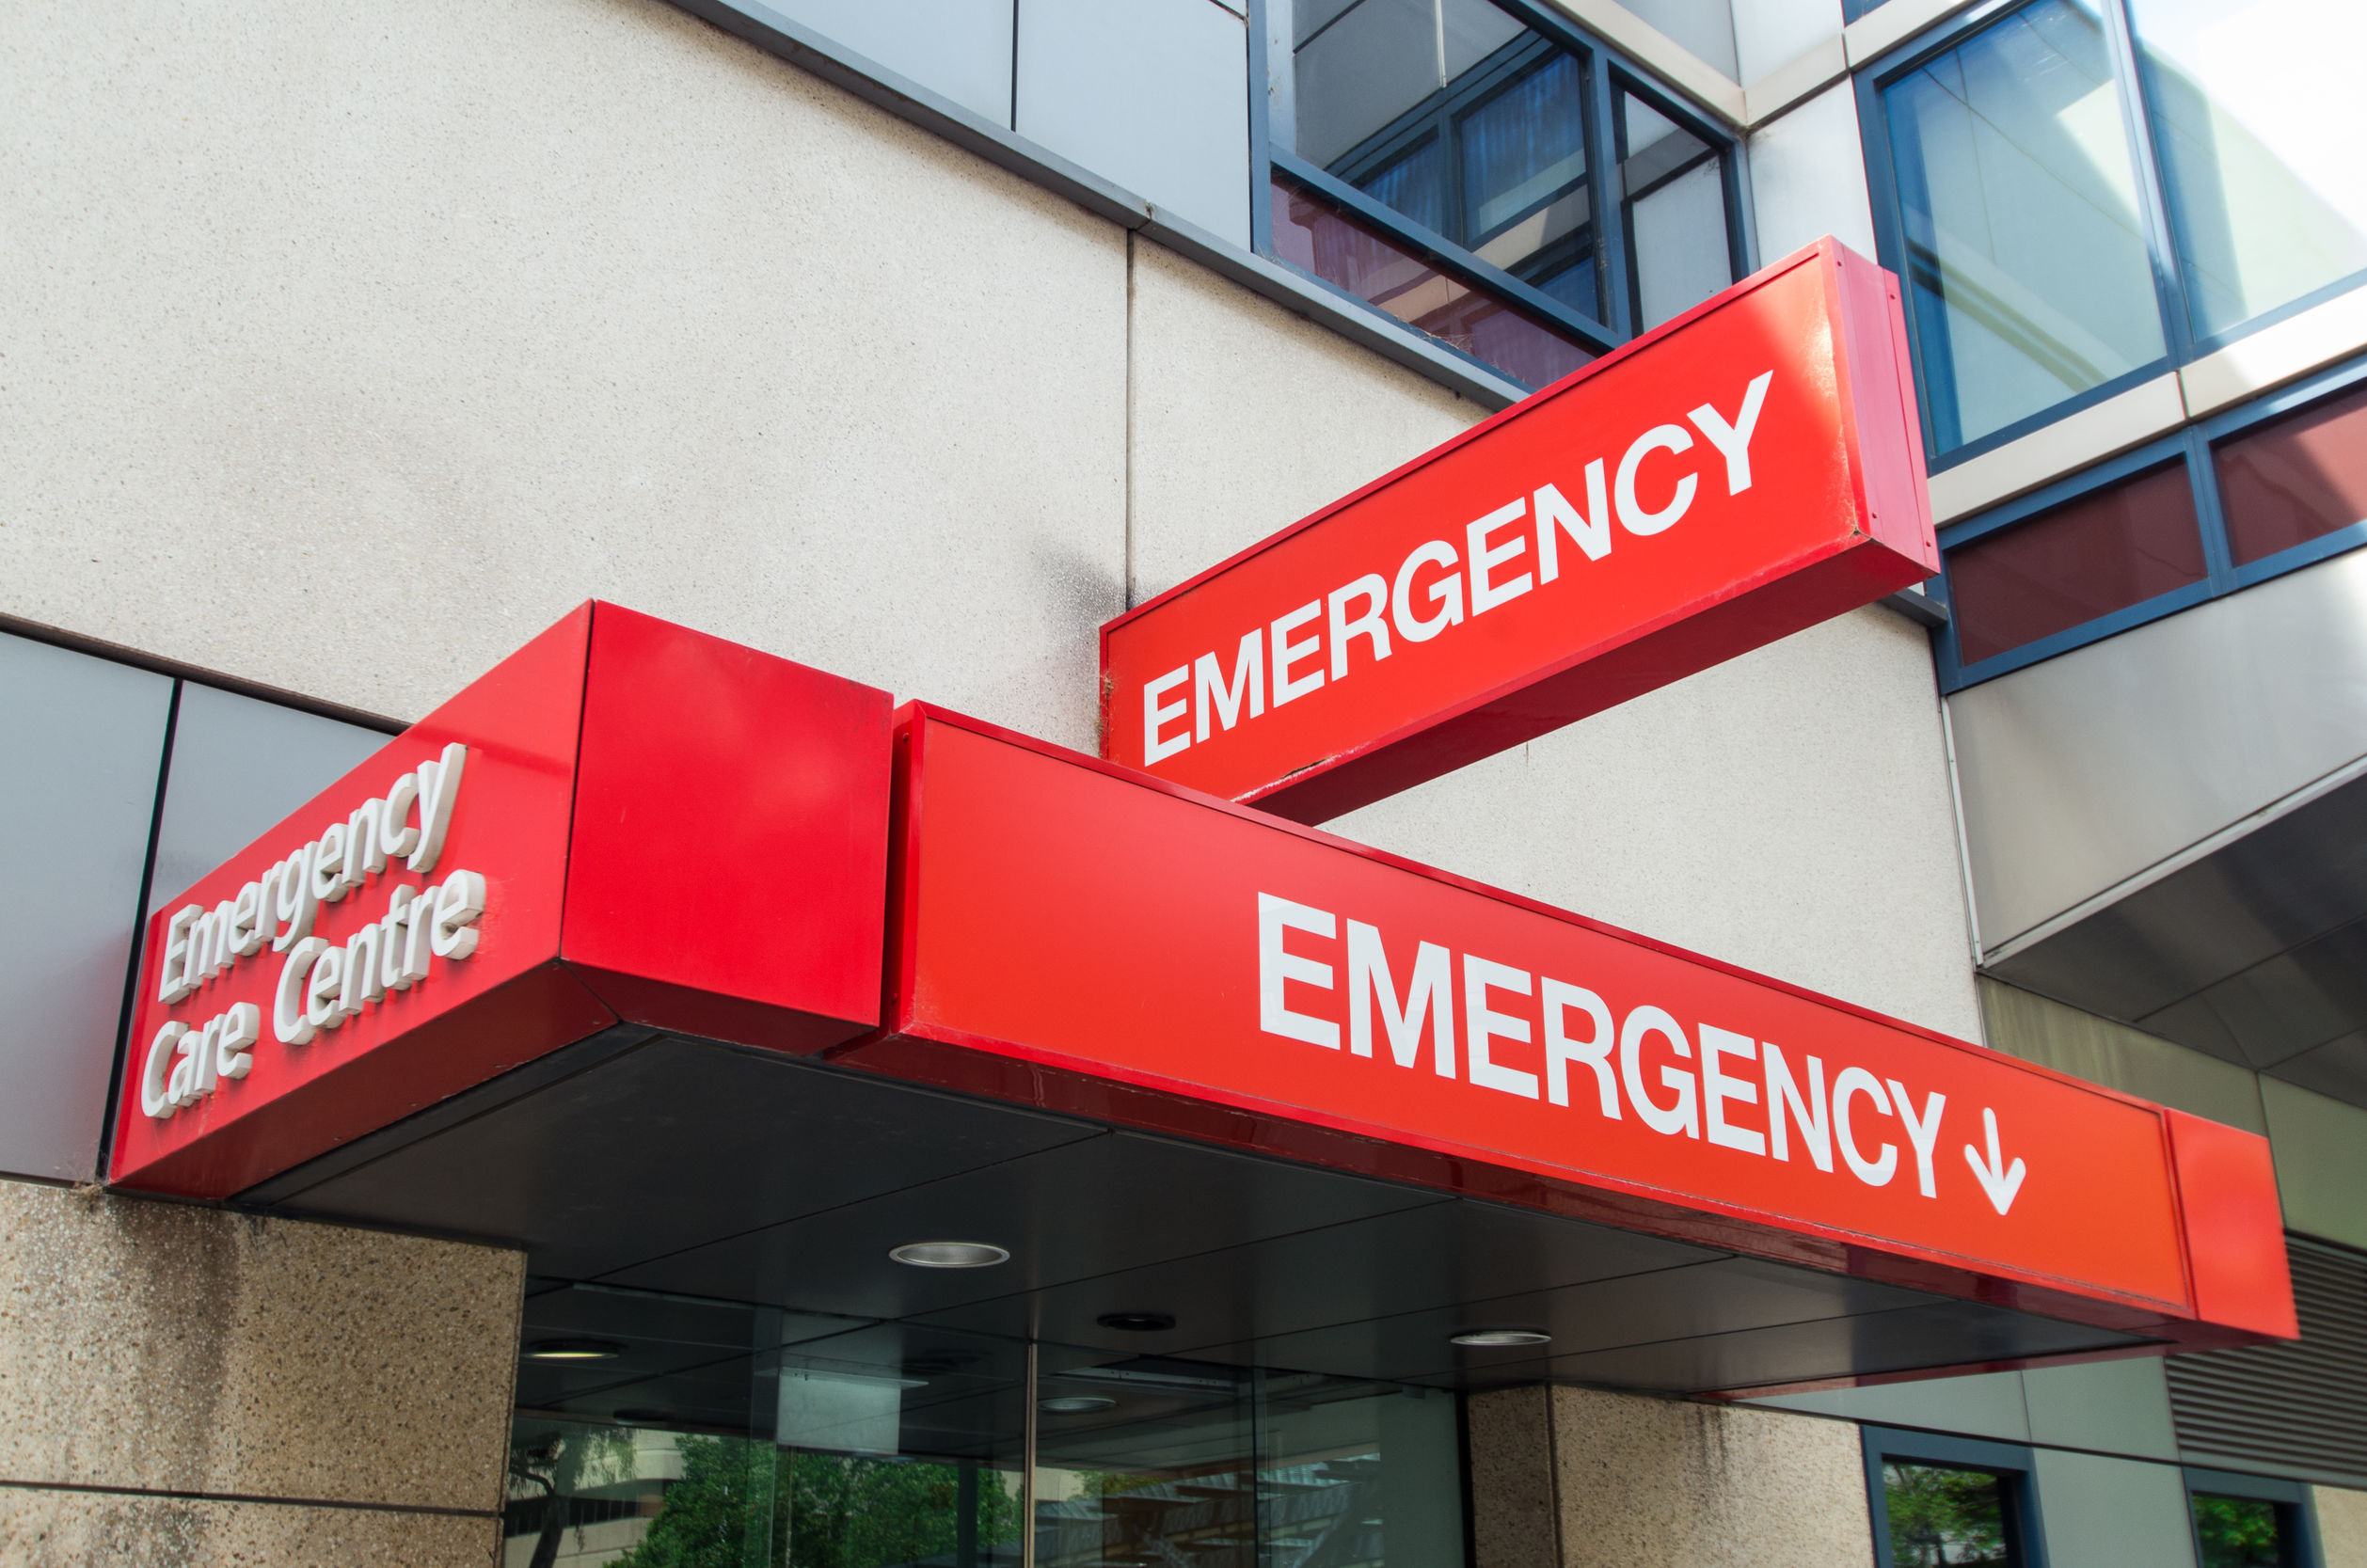 Hospital emergency room sign